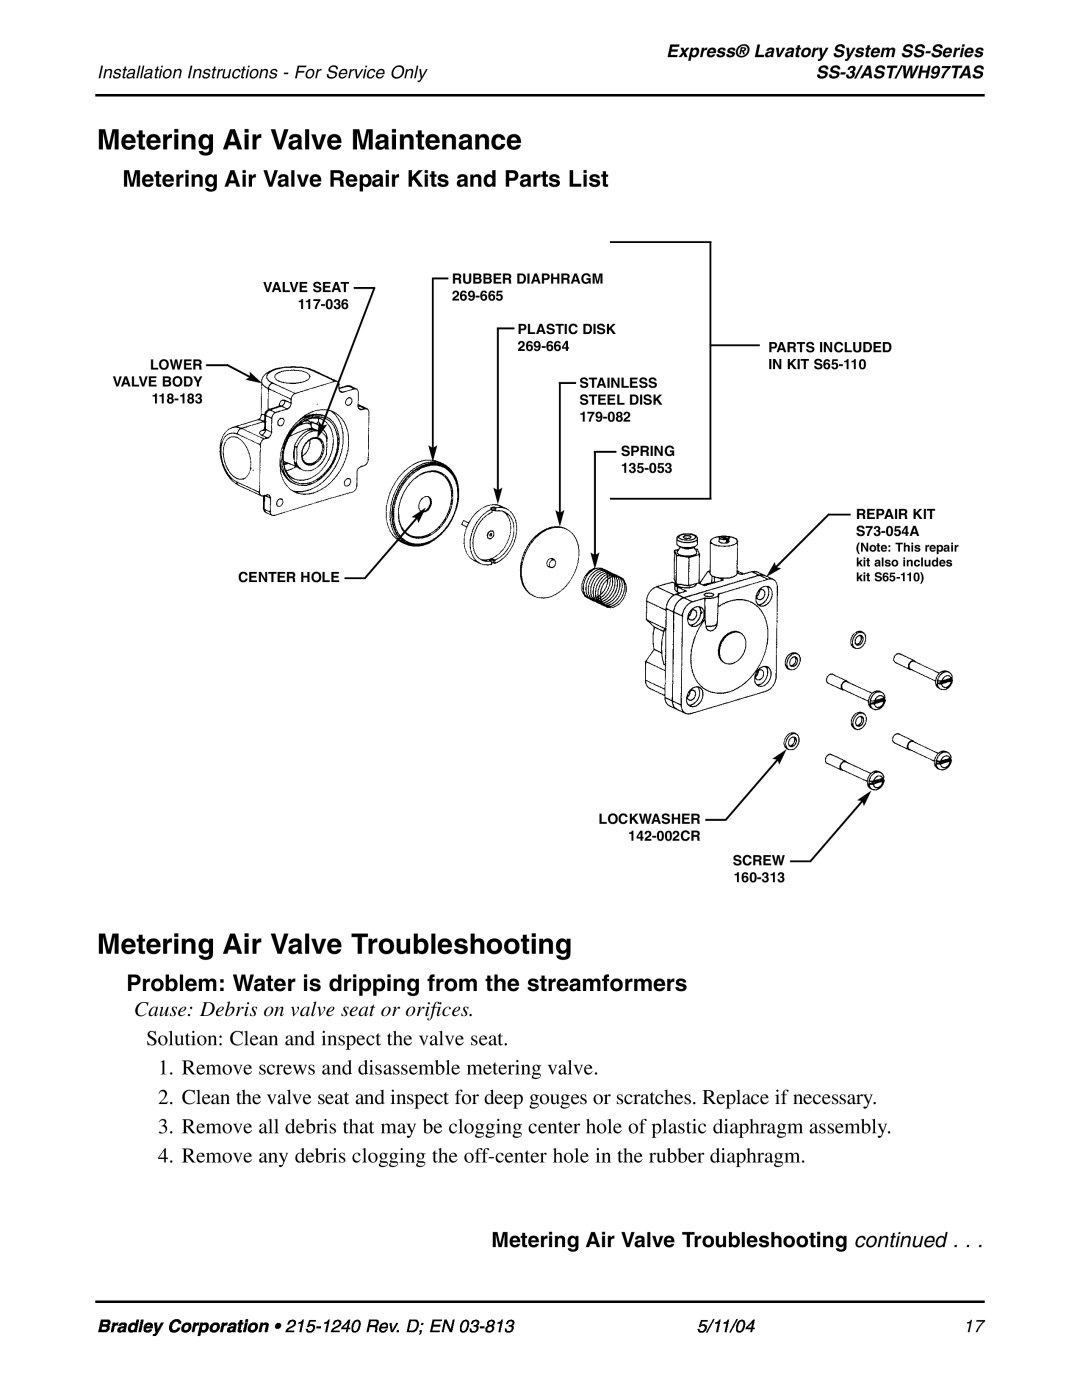 Bradley Smoker SS-3 installation instructions Metering Air Valve Maintenance, Metering Air Valve Troubleshooting 